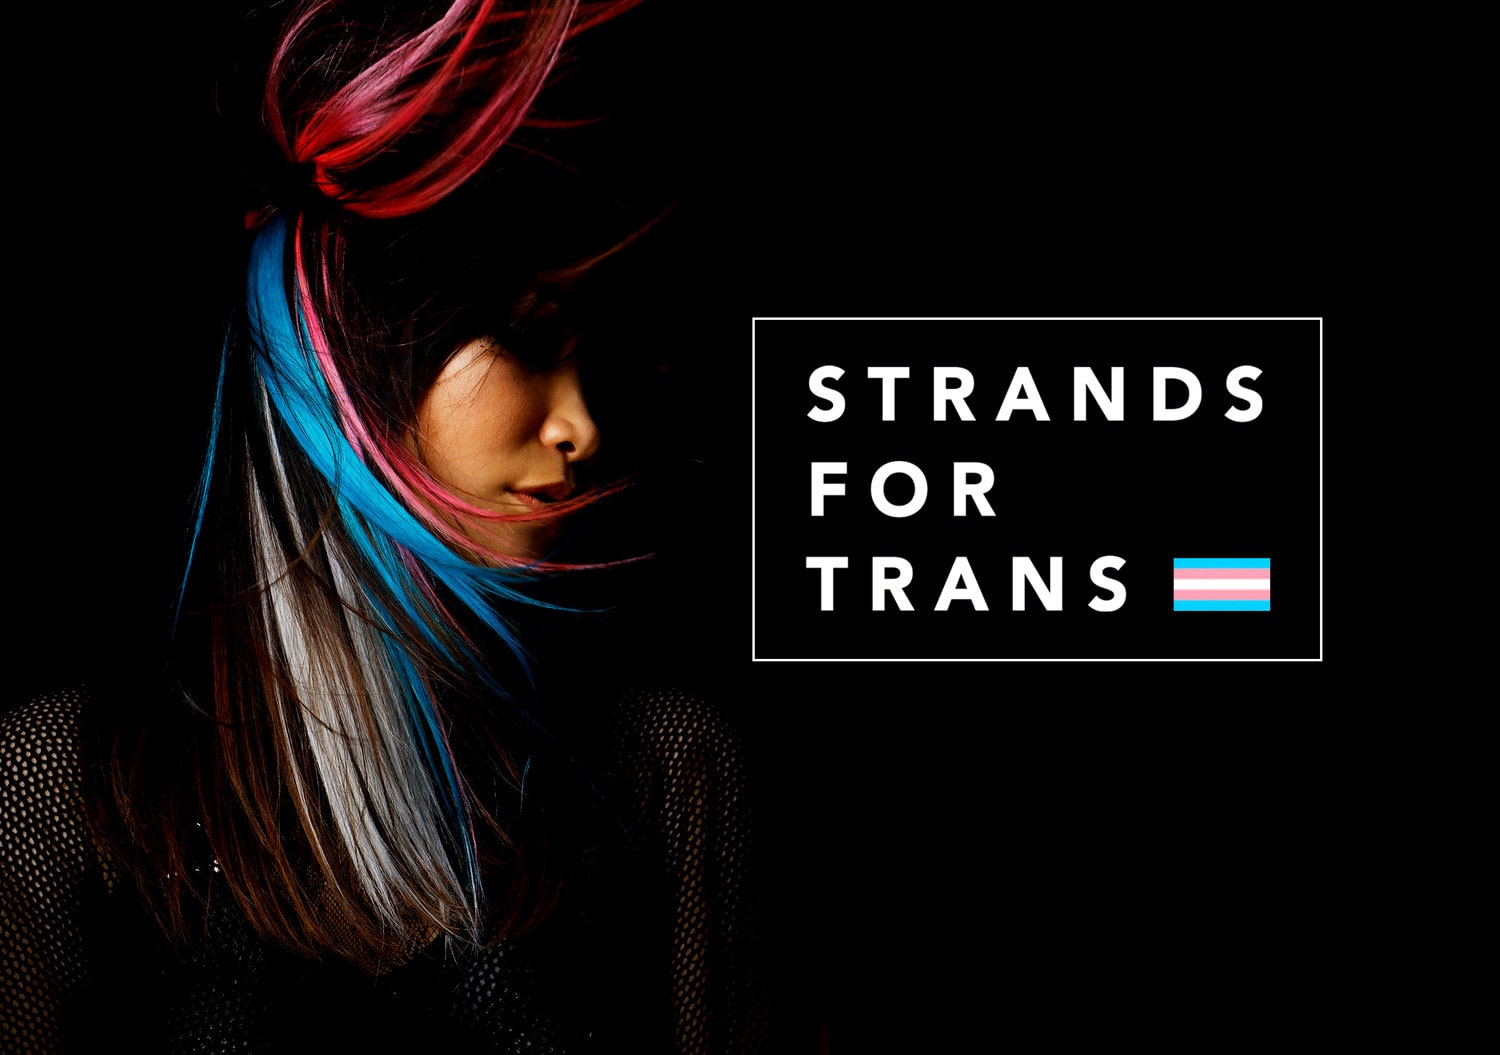 #strandsfortrans